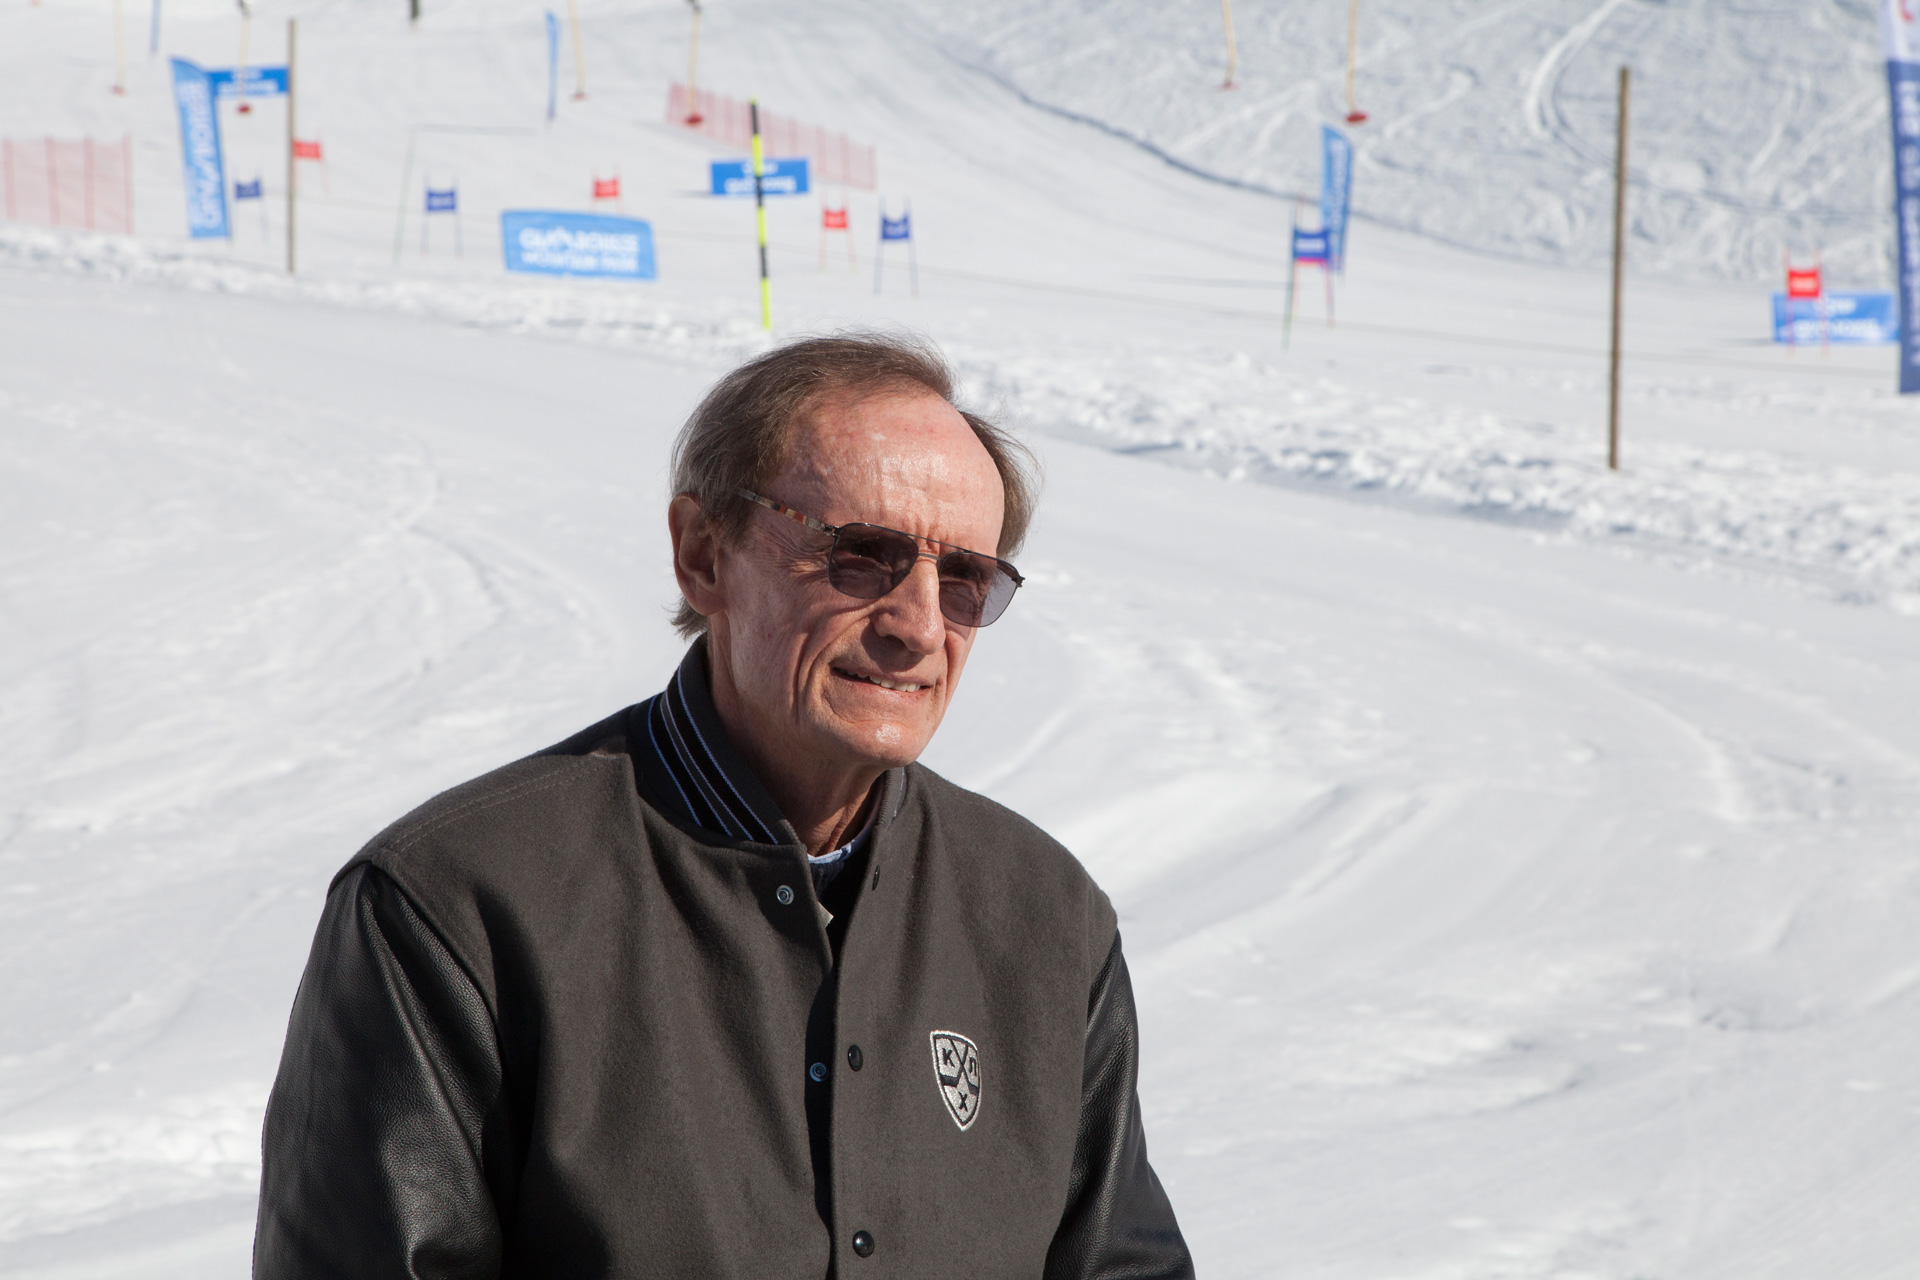 Jean-claude Killy champion JO 1968 50 ans jeux olympiques station ski montagne grenoble isère alpes france - © Ann David